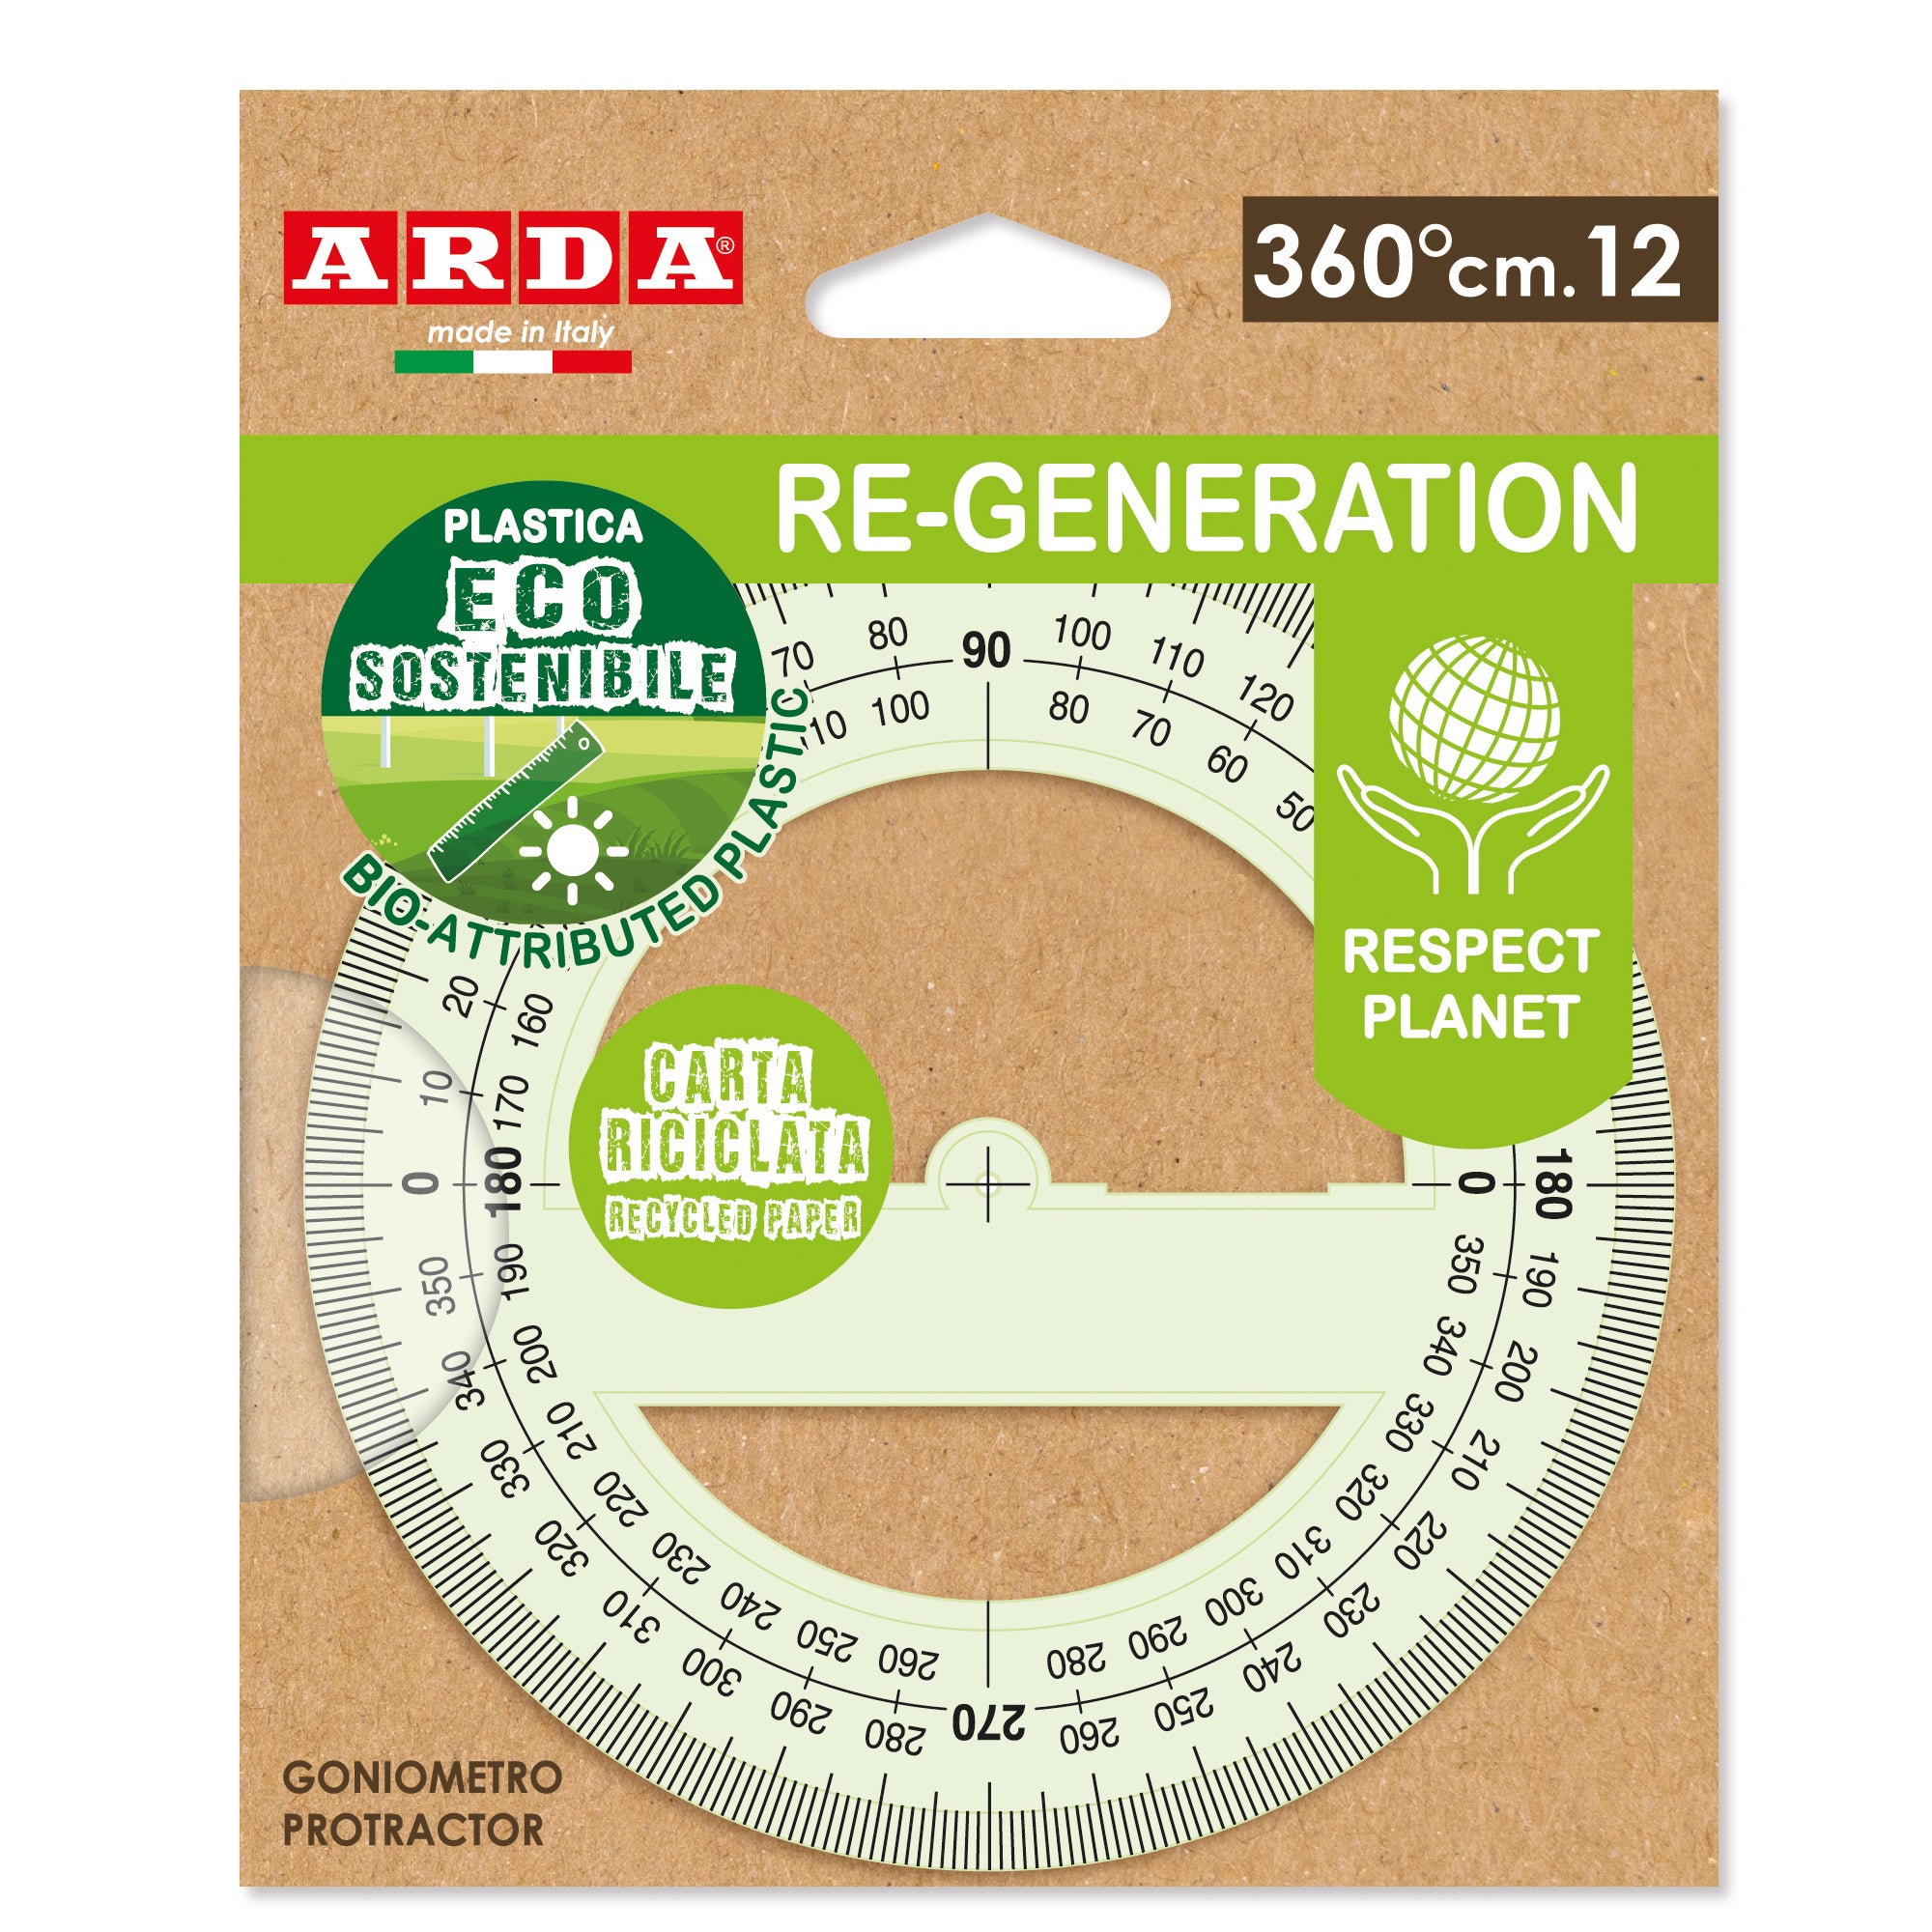 arda-goniometro-360-12cm-re-generation